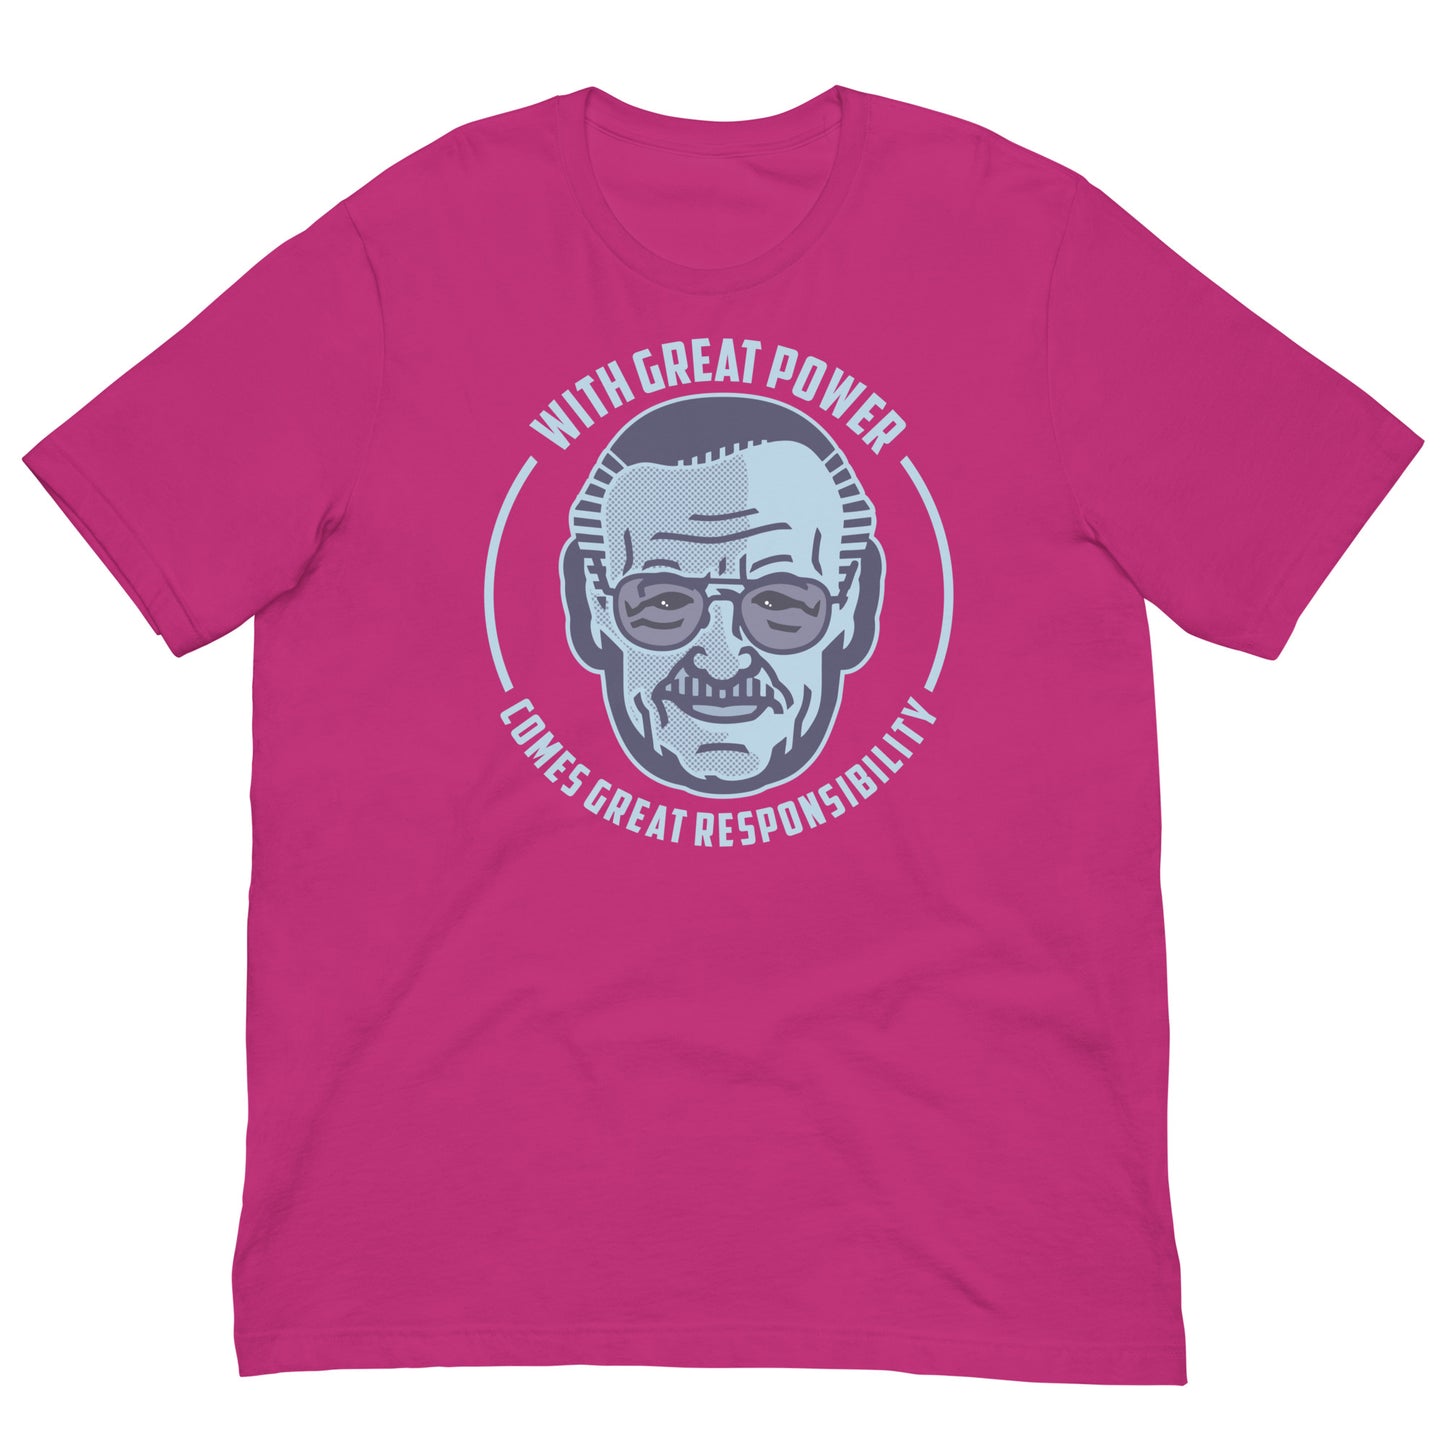 Stan Lee "Great Power" T-Shirt